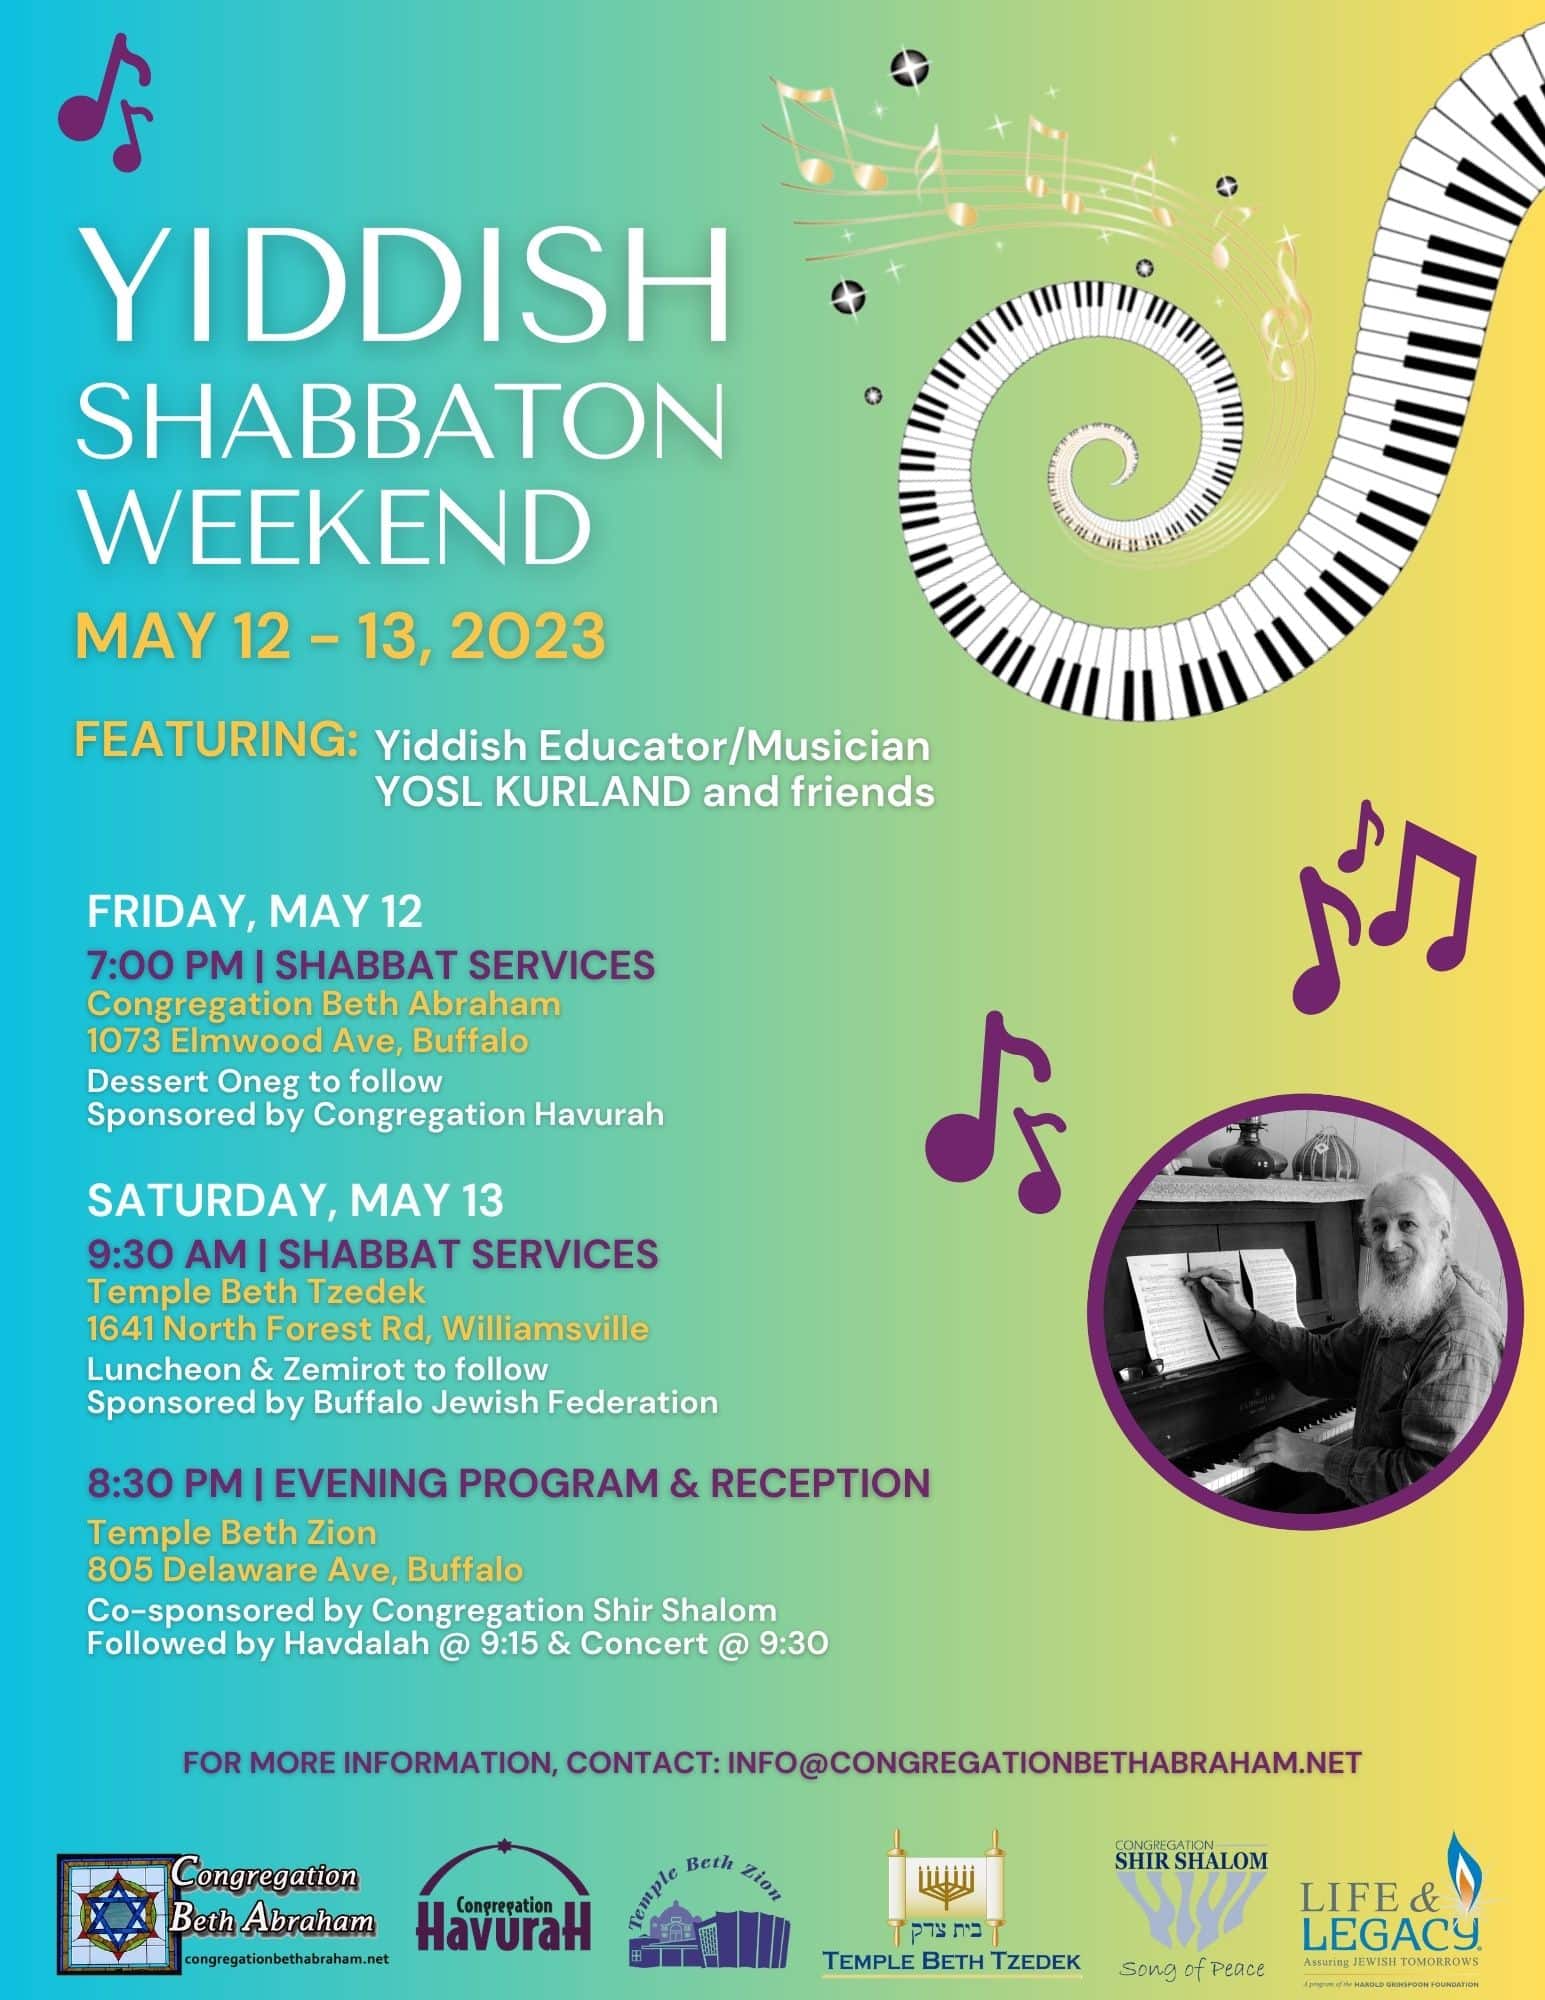 Buffalo Yiddish-Themed Shabbaton - Yiddish Shabbaton weekend